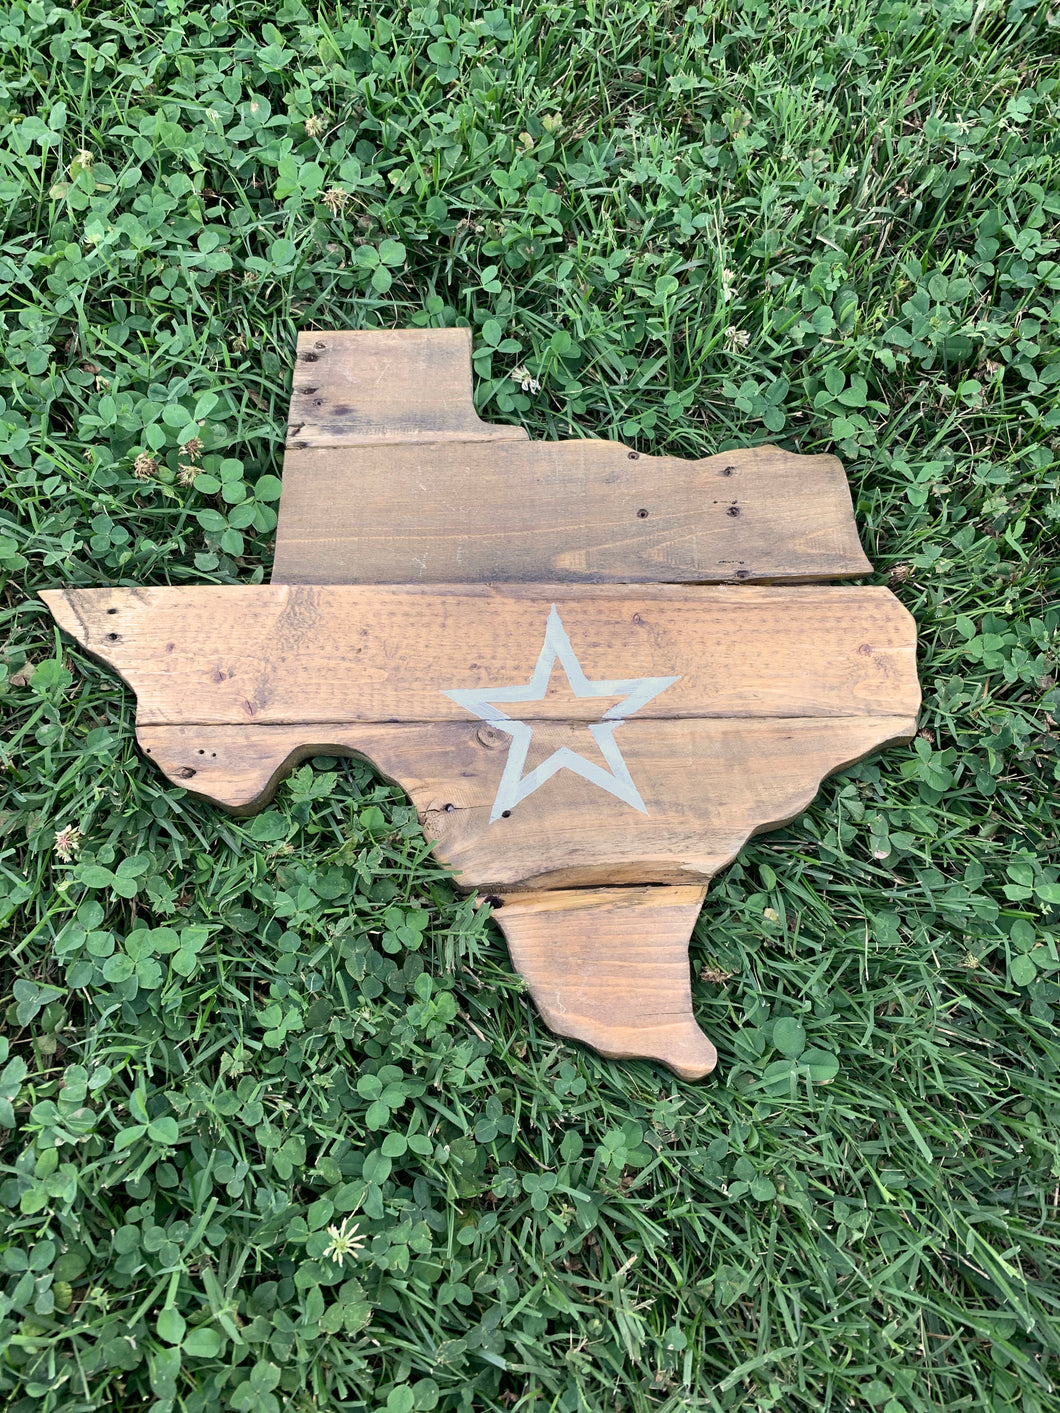 Dark Rustic Lone Star Texas